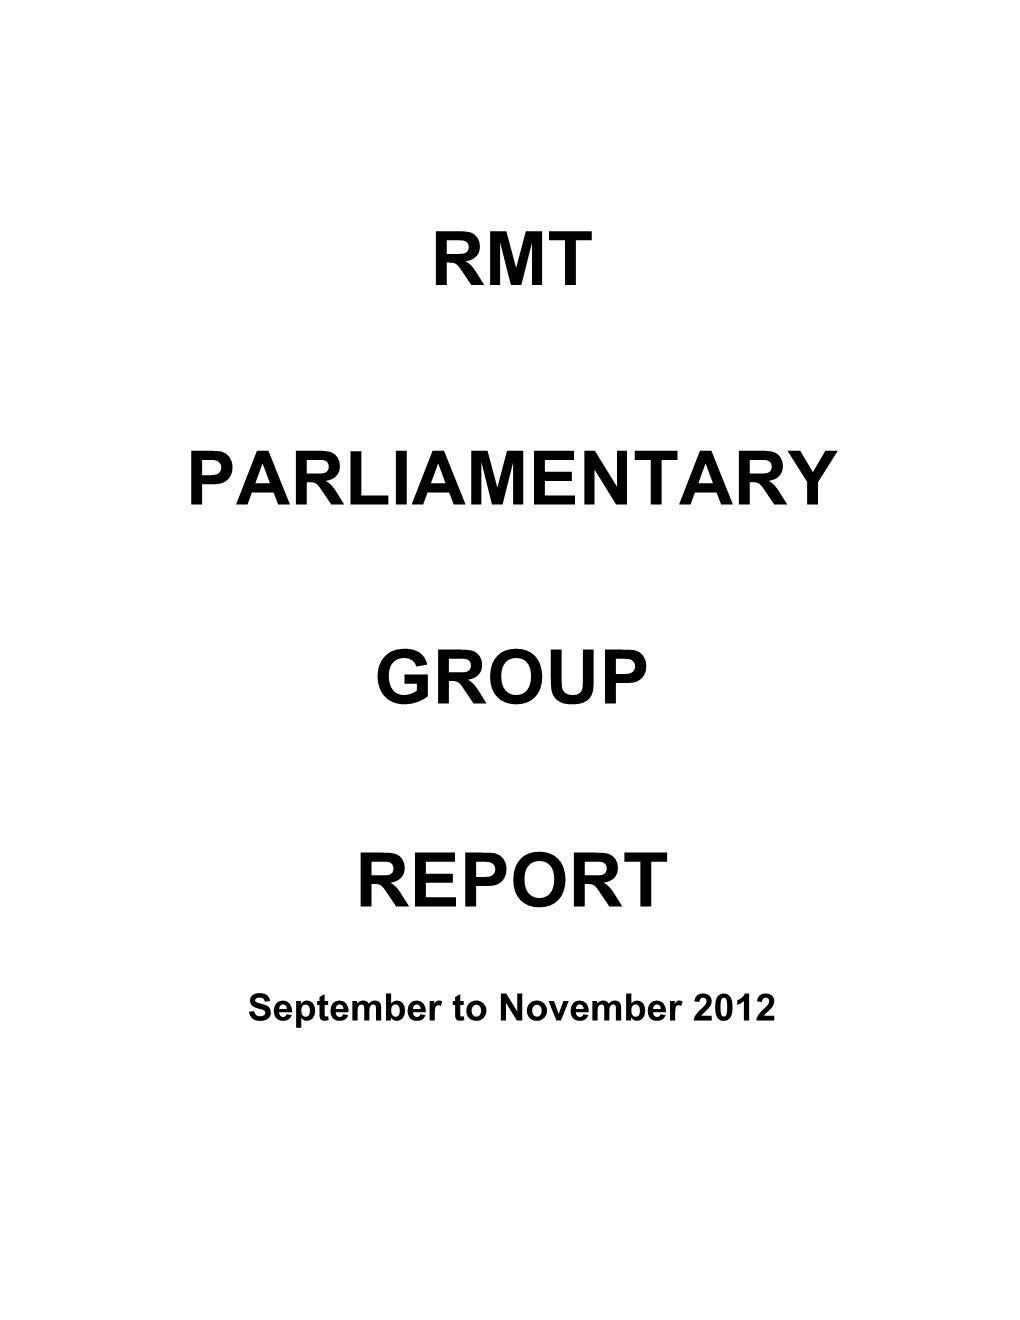 RMT Report to November 2012 -FINAL